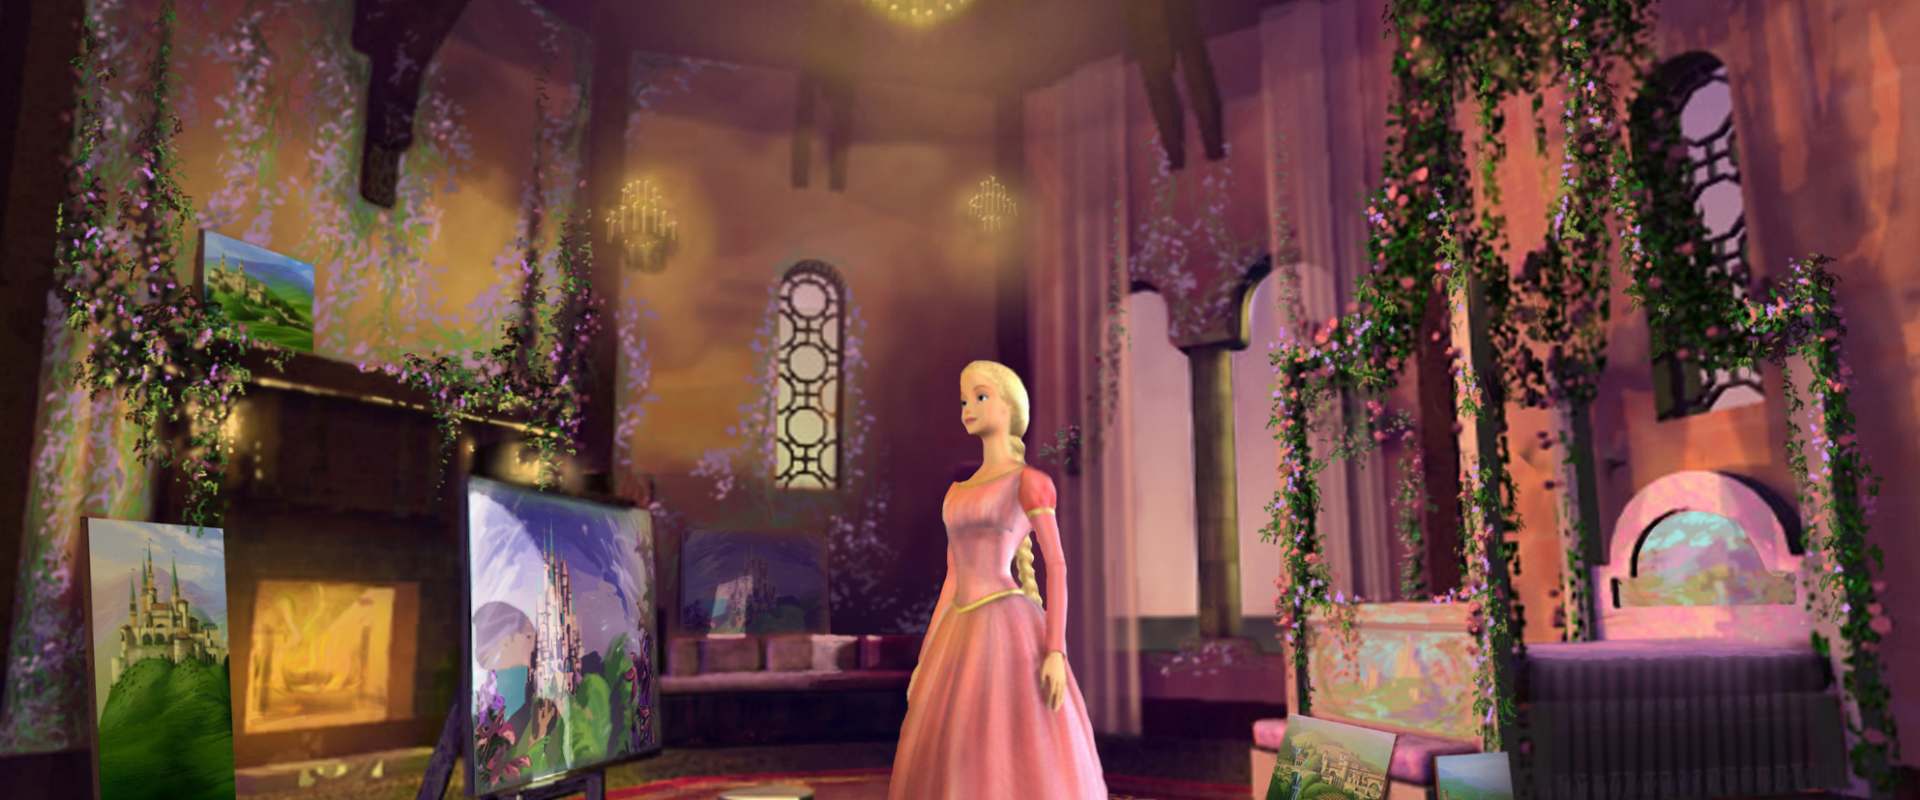 Barbie as Rapunzel background 1